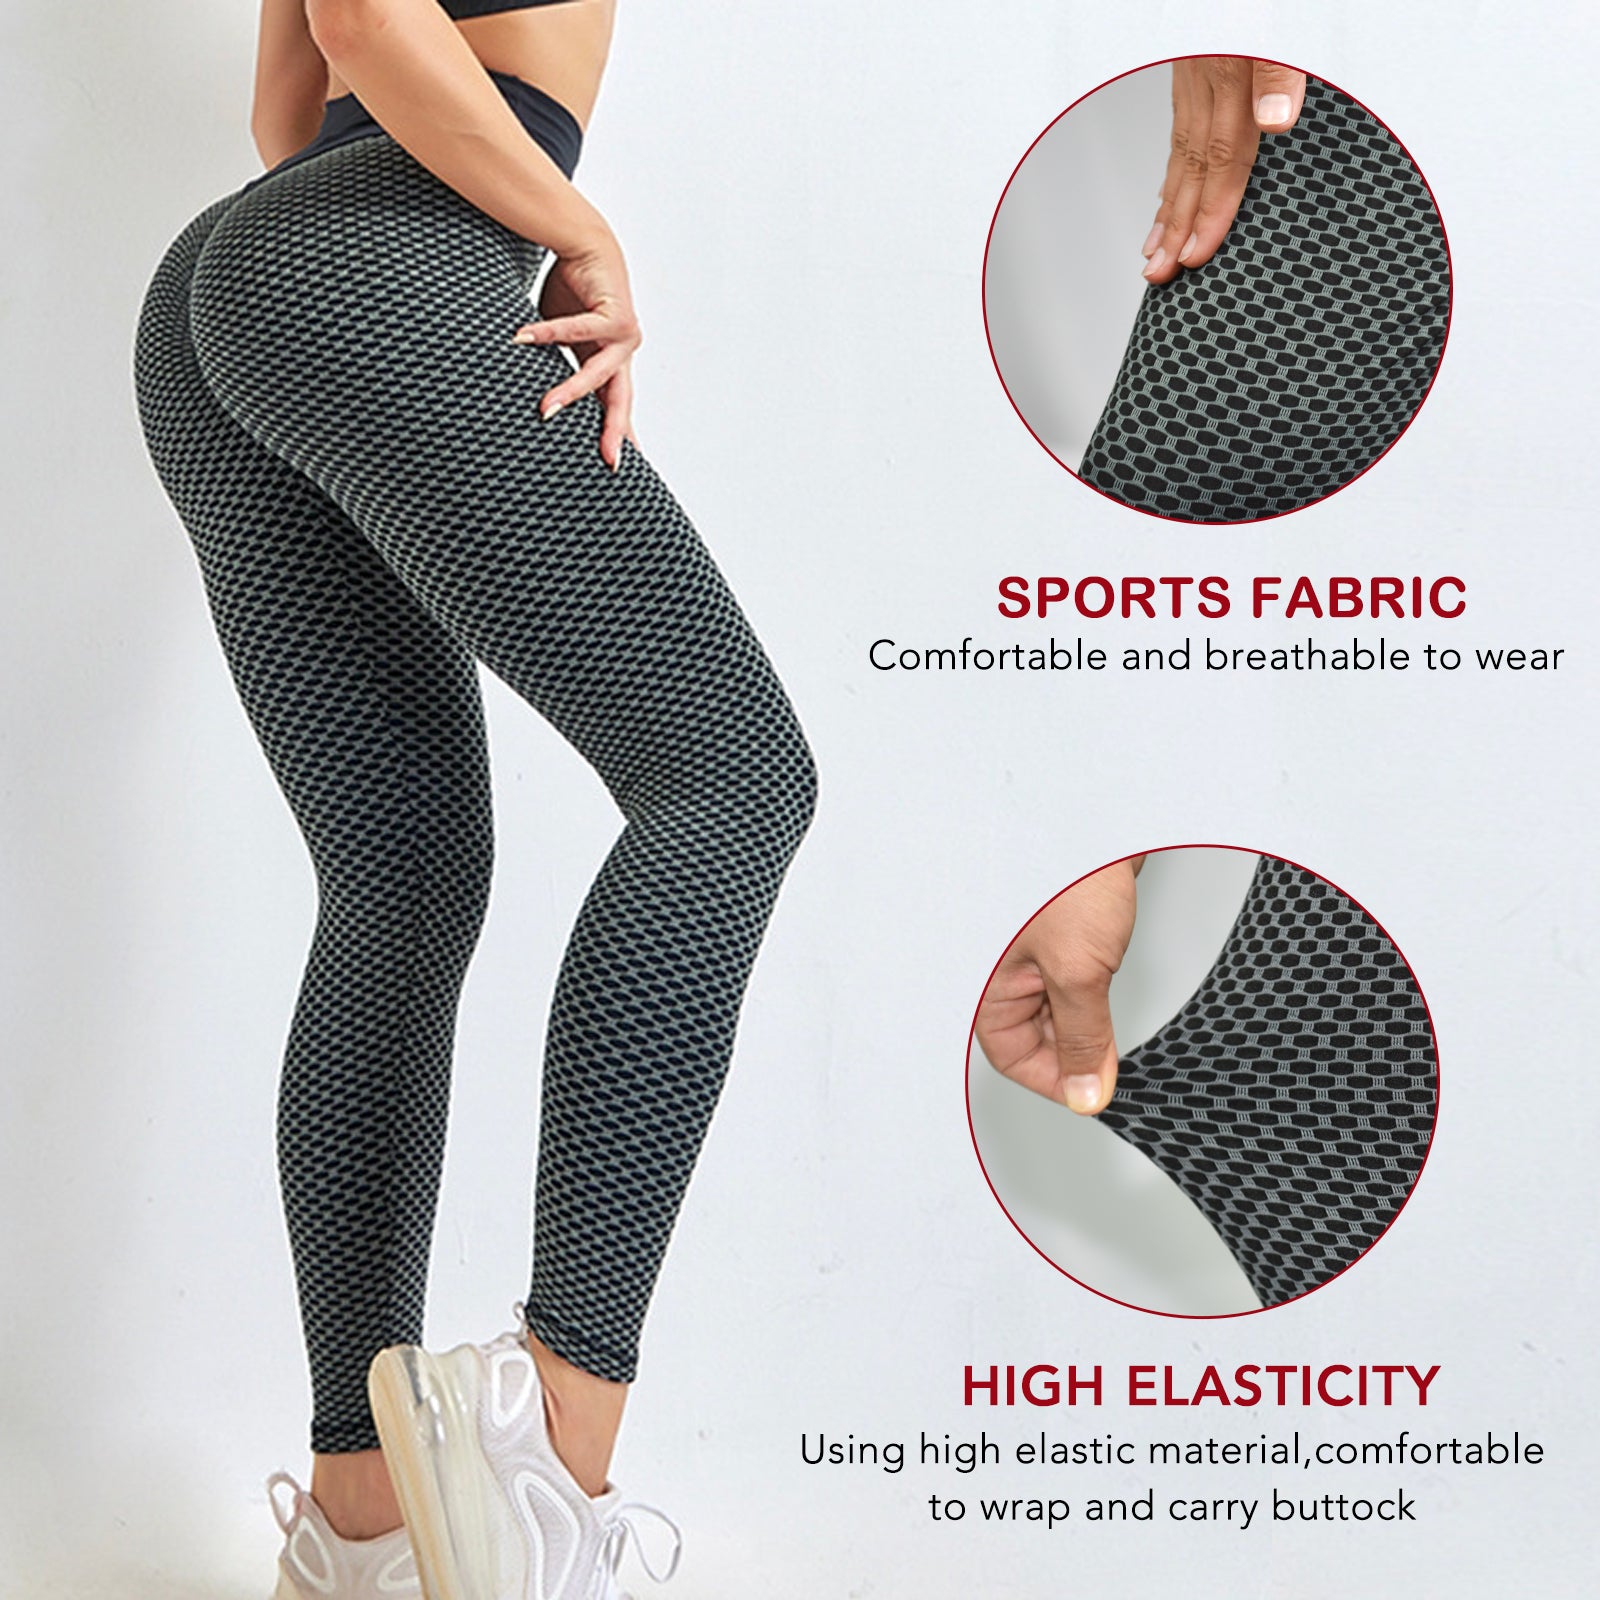 TIK Tok Leggings Women Butt Lifting Workout Tights Plus Size Sports High Waist Yoga Pants Small Amazon Banned - Better Life